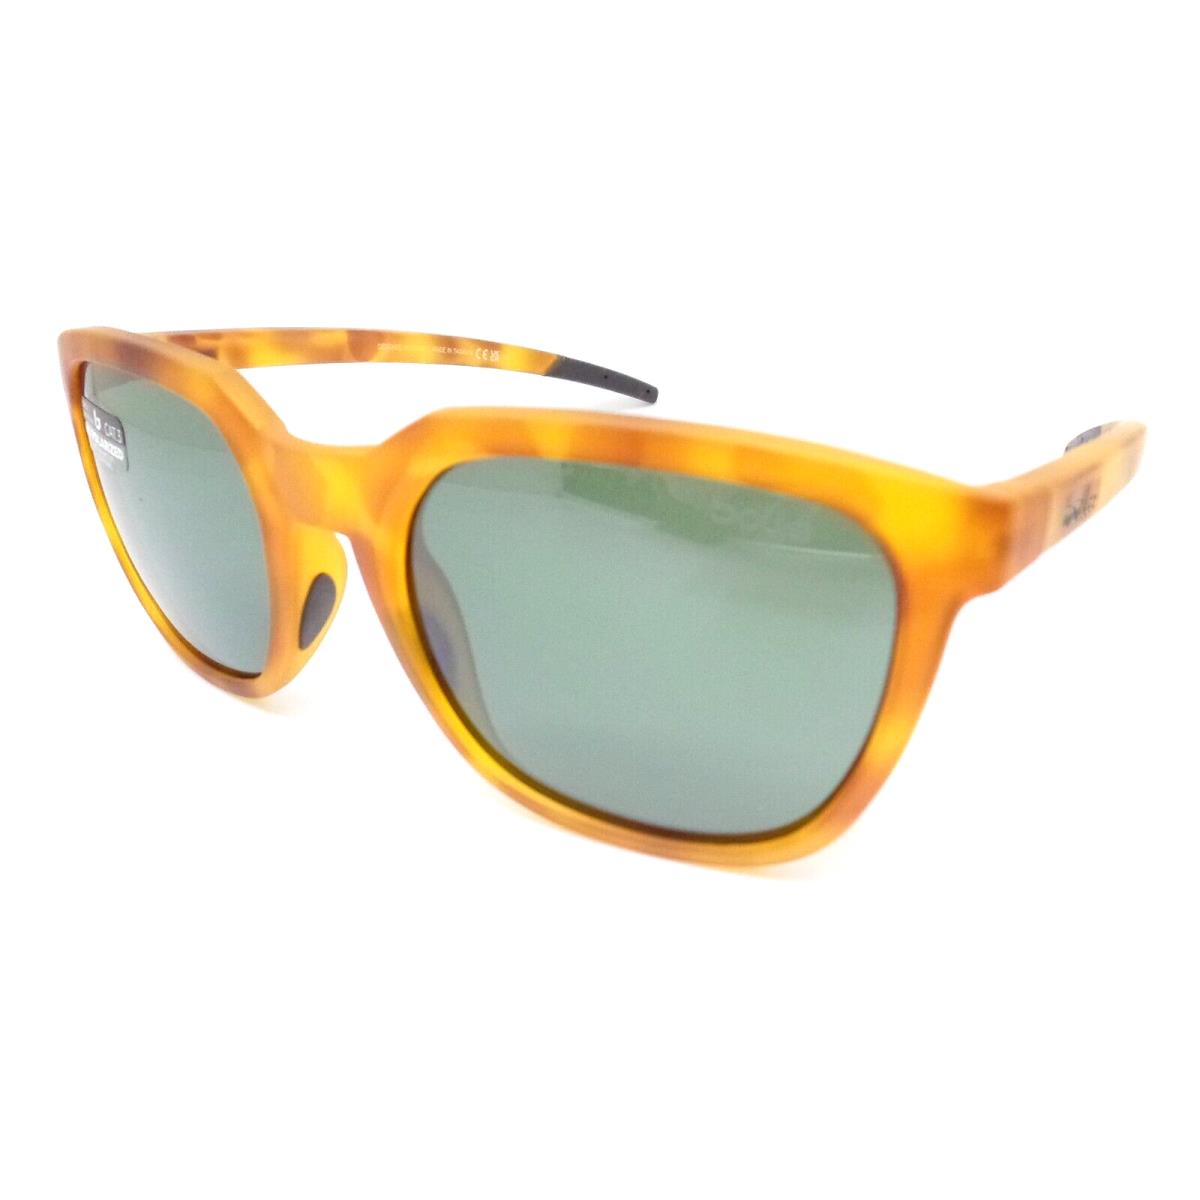 Bolle Talent Caramel Matte Tortoise Axis Polarized Sunglasses - Caramel Tortoise Matte Frame, Axix Polarized Lens